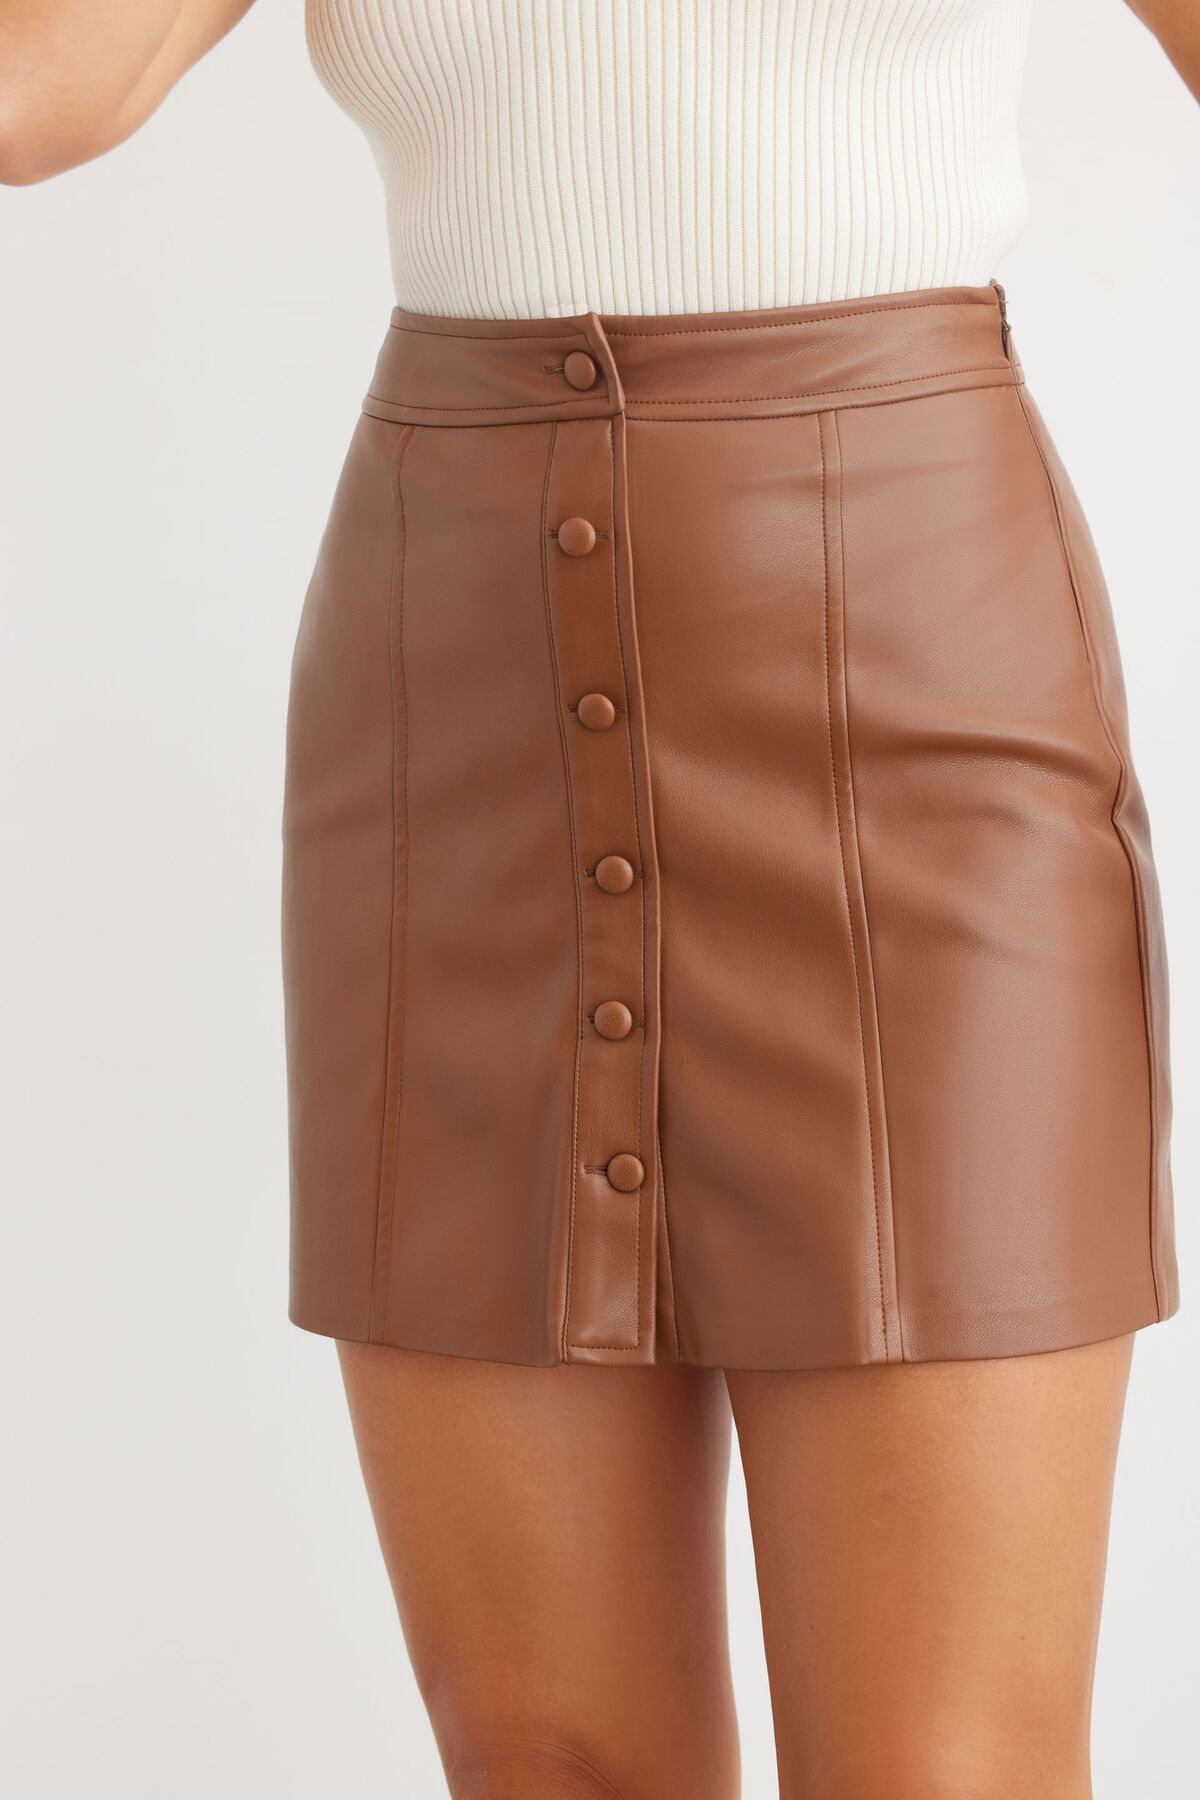 Dynamite Faux Leather Mini Button Skirt. 4